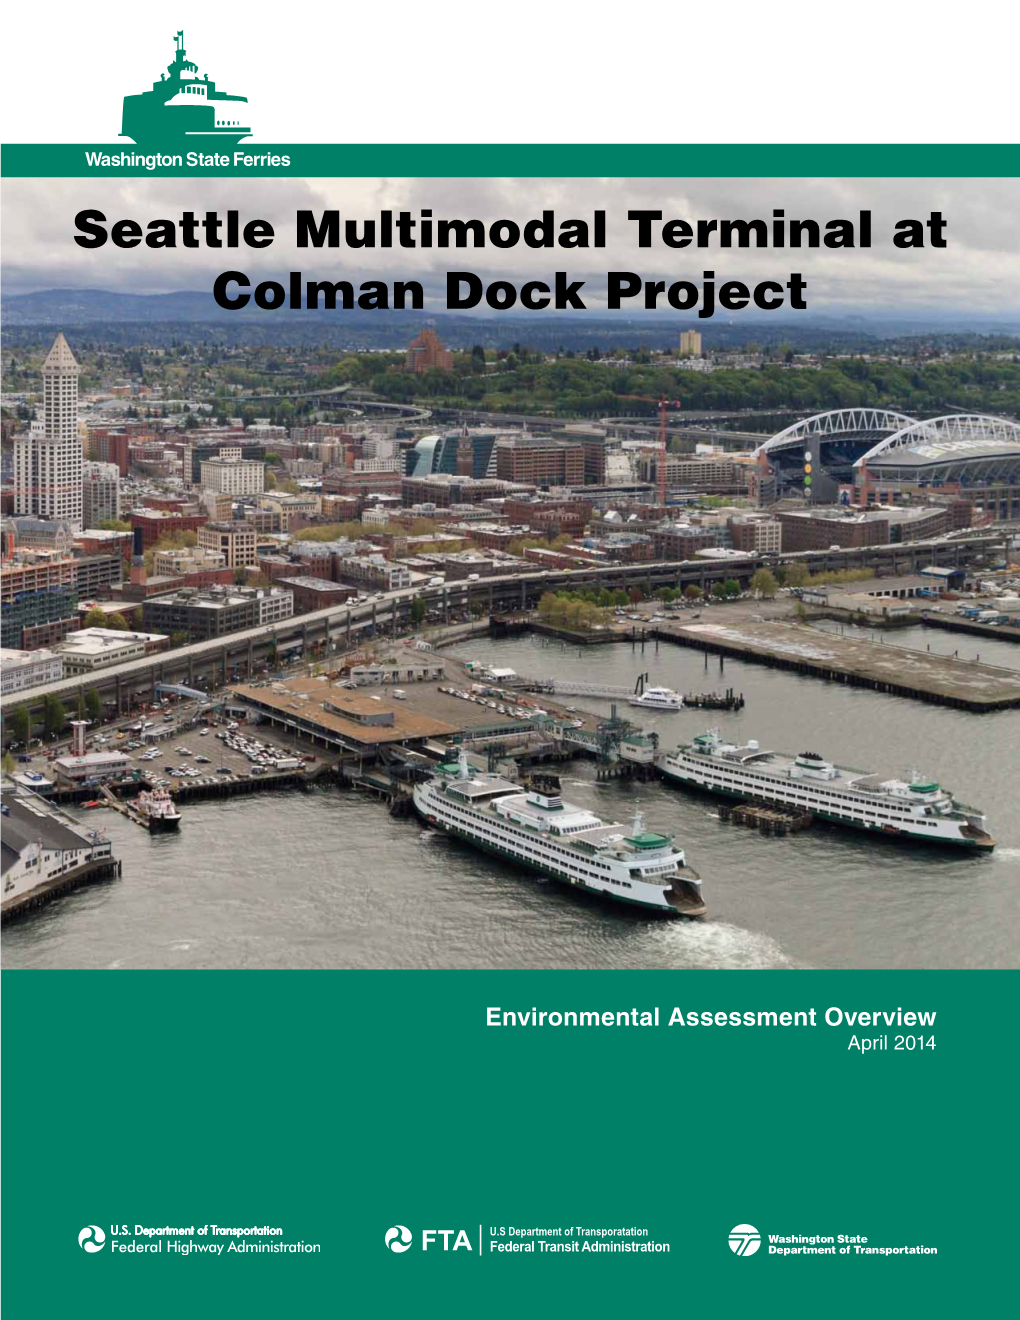 Colman Dock Environmental Assesssment Overview